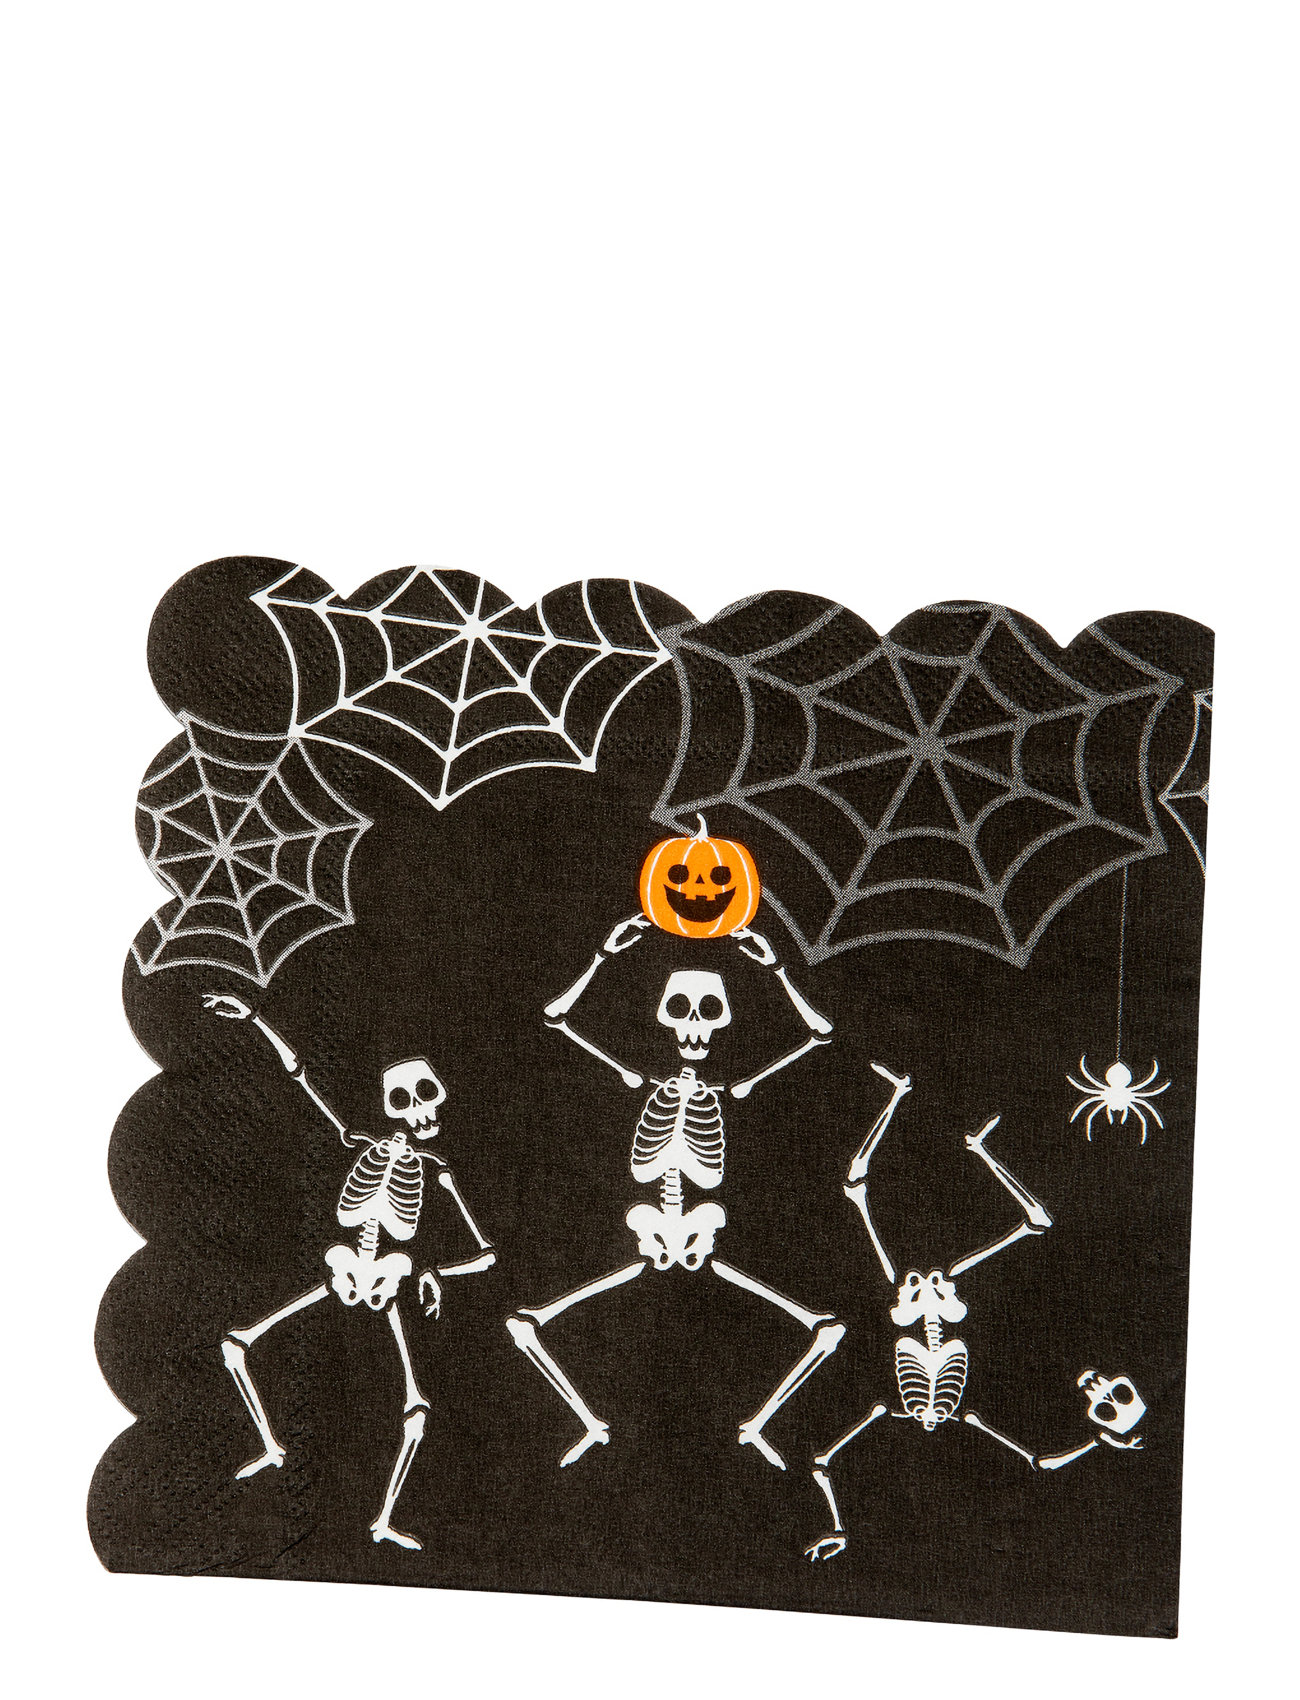 Paper Napkins Skeleton 16-P Home Kids Decor Party Supplies Black Joker